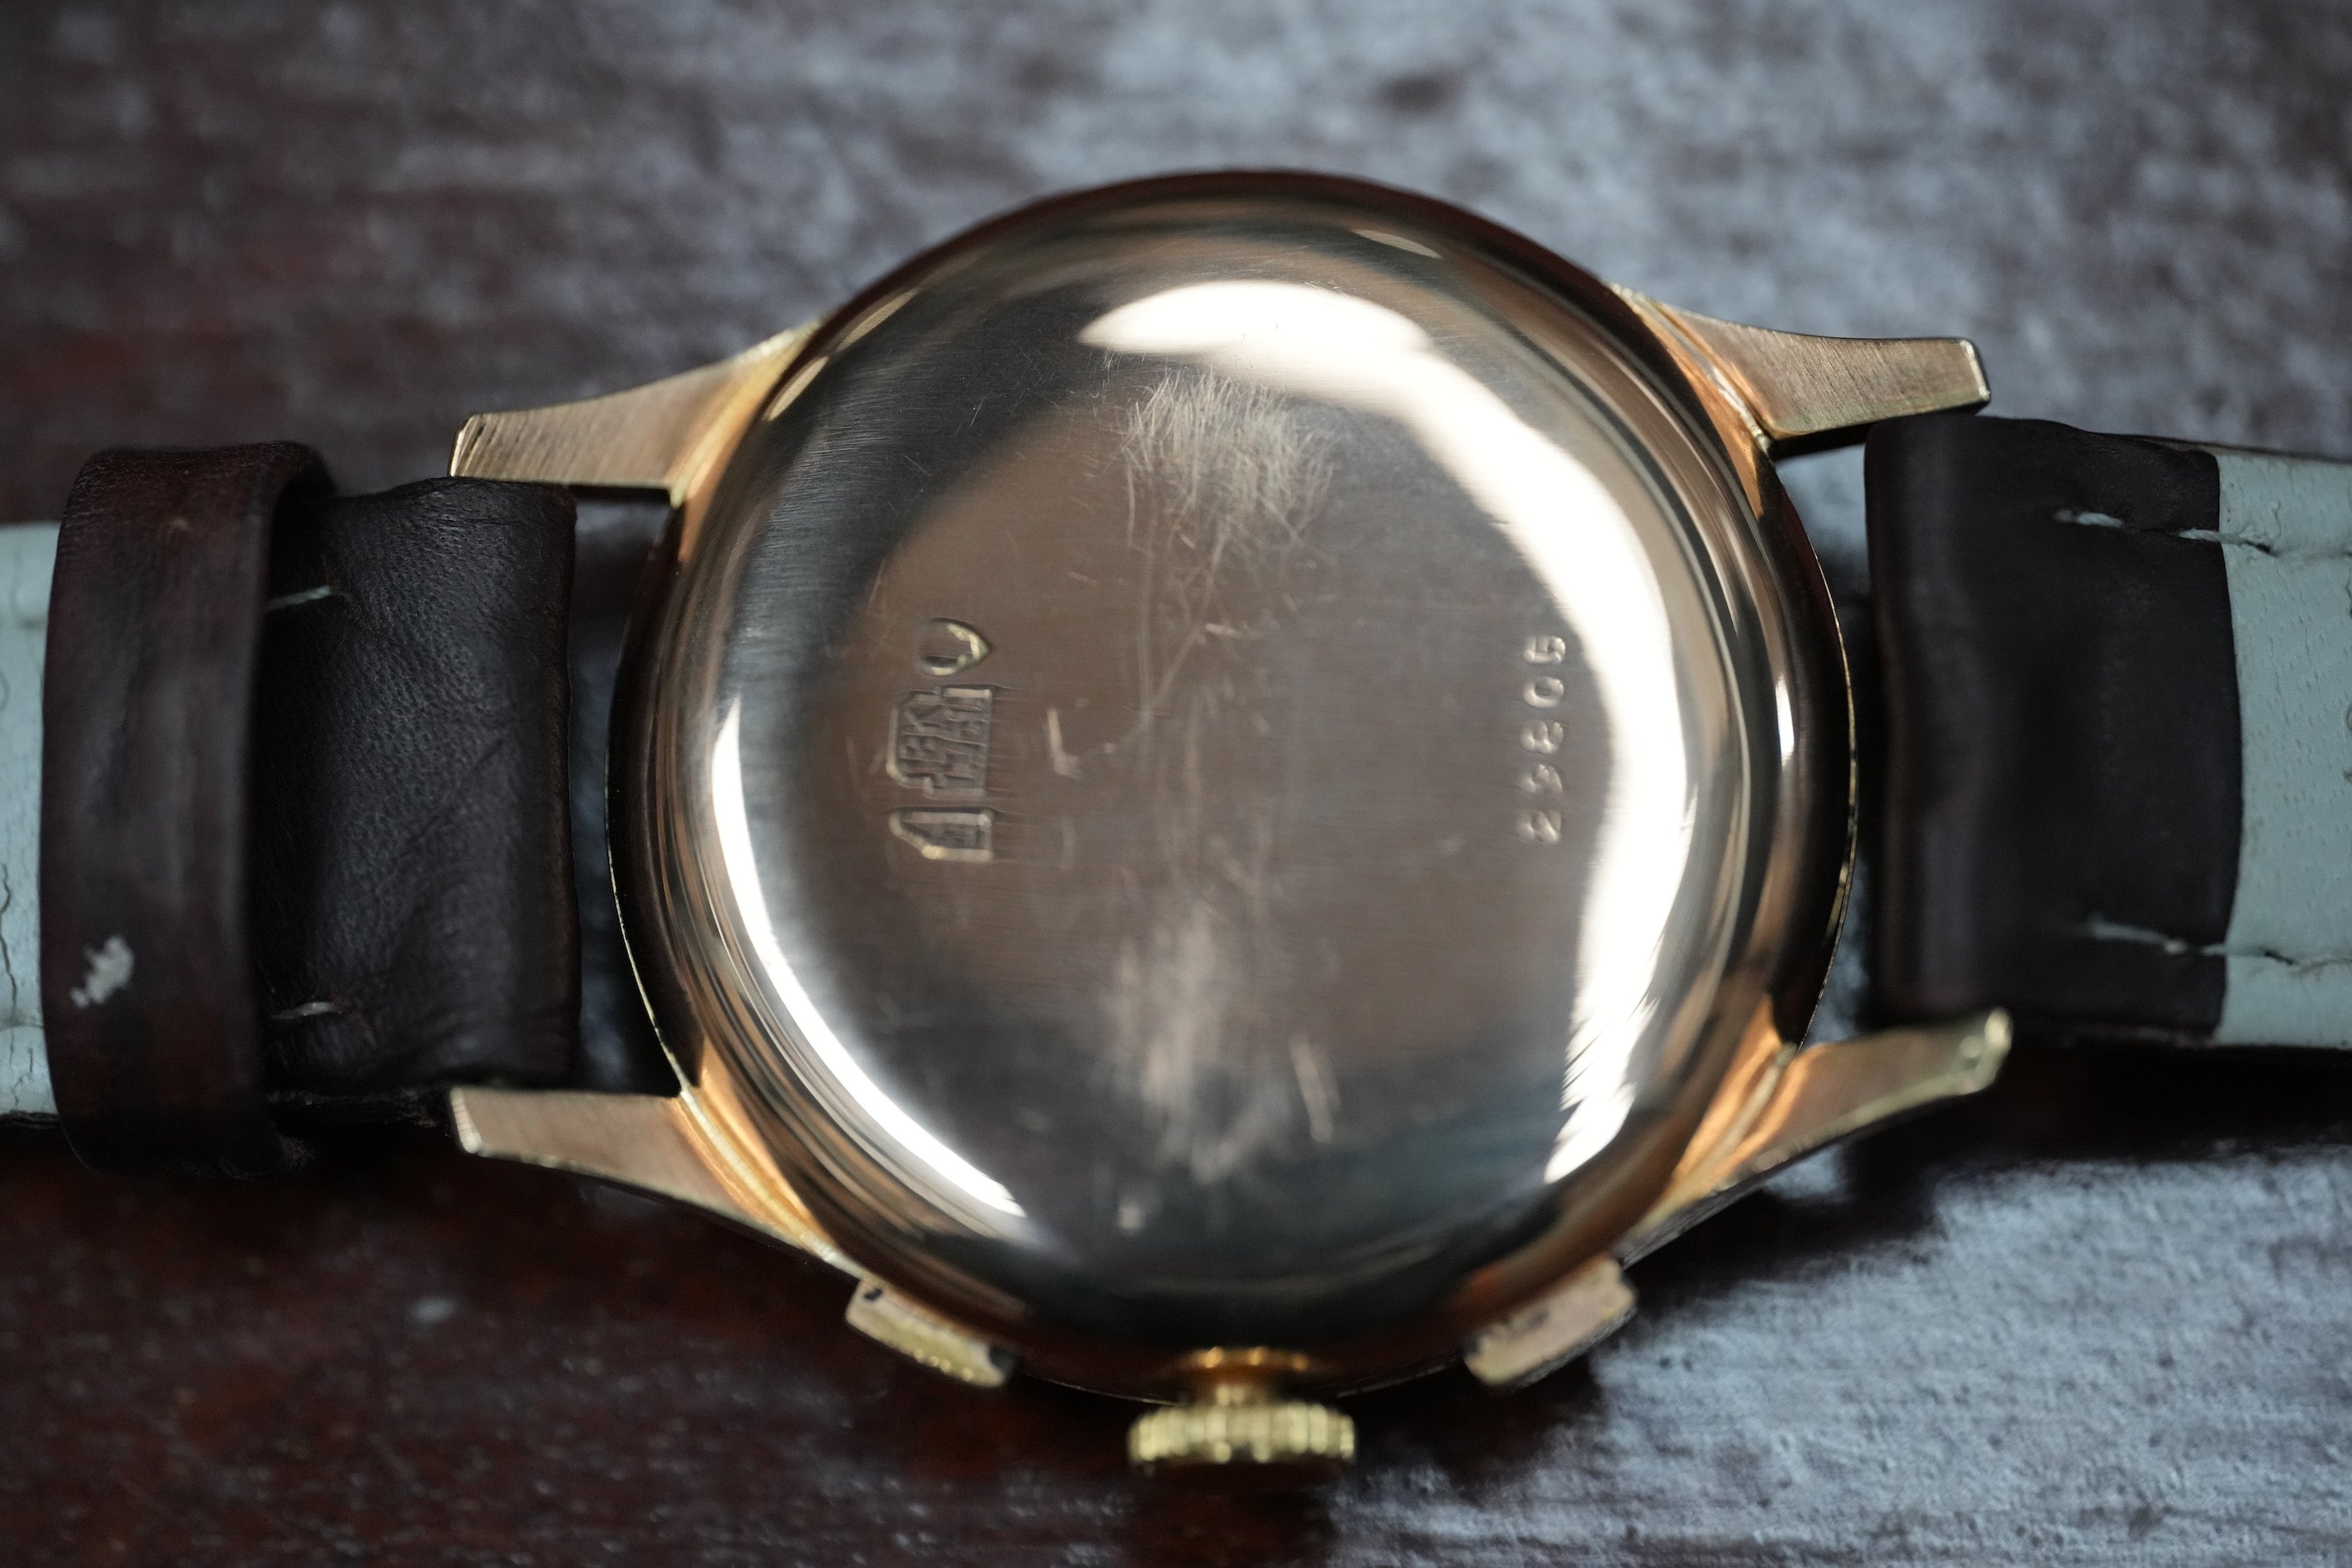 18k rosegold Luzerna chronograph